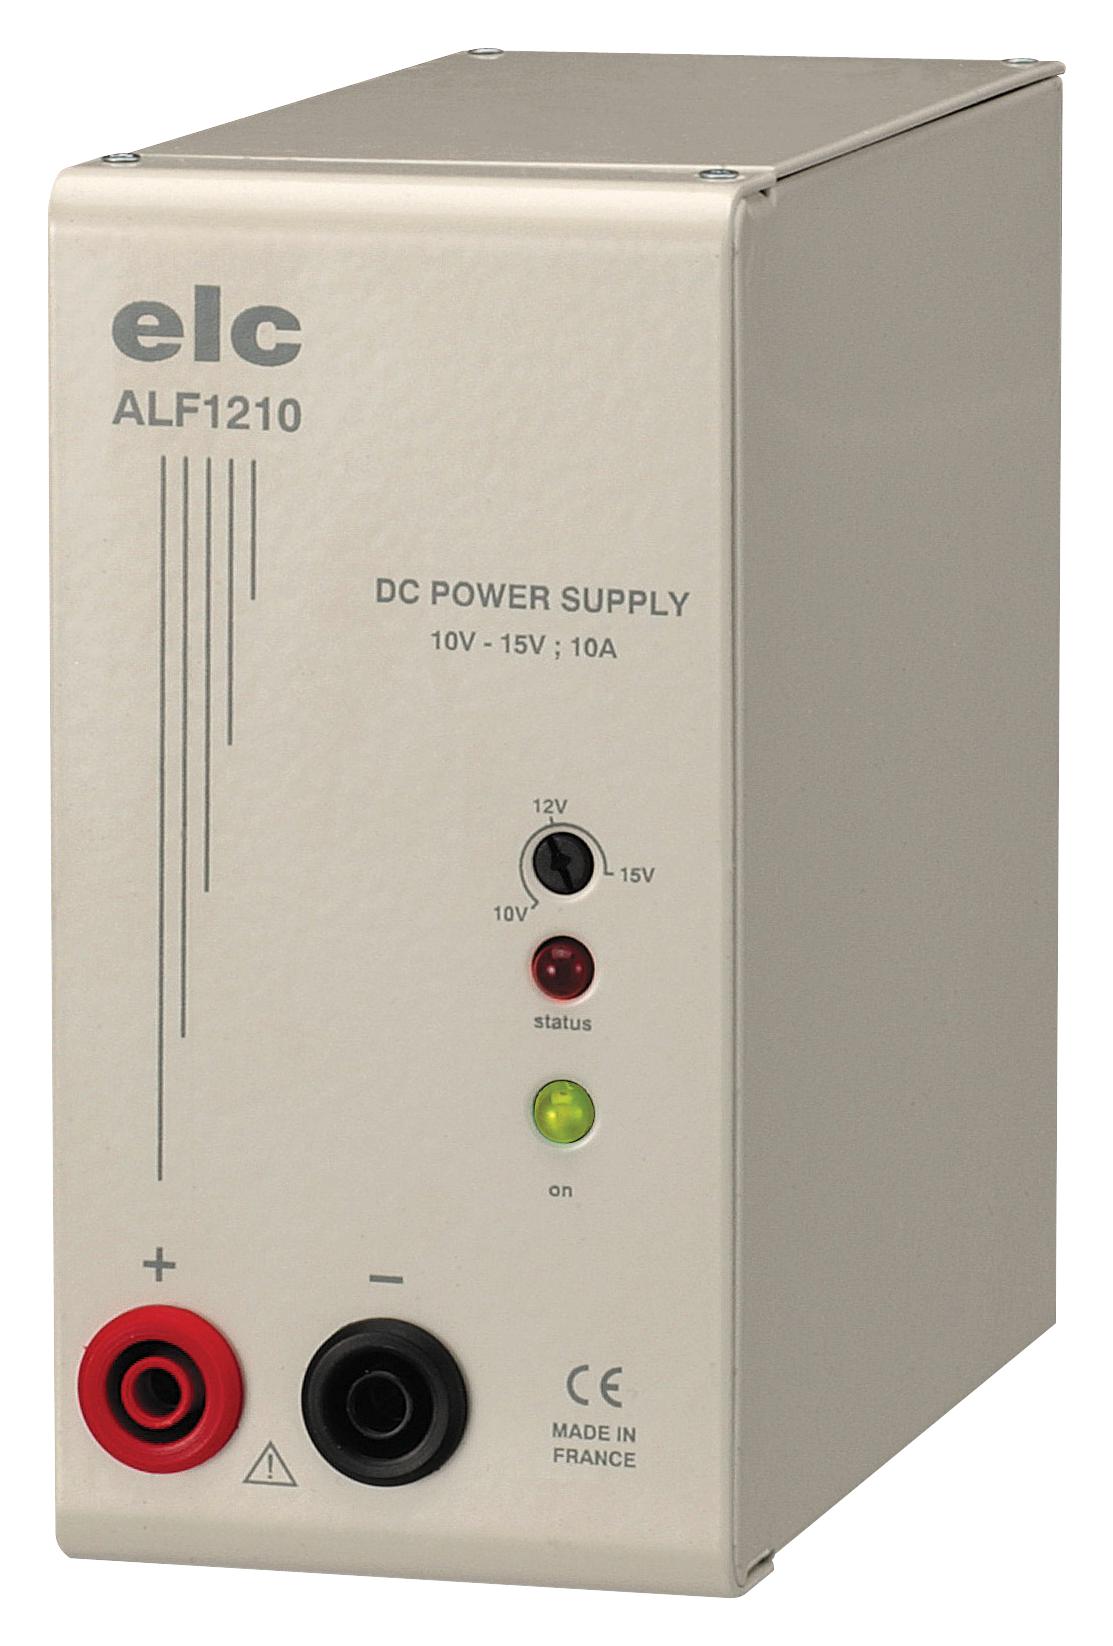 Elc Alf1210 Power Supply, 1Ch, 15V, 10A, Adjustable